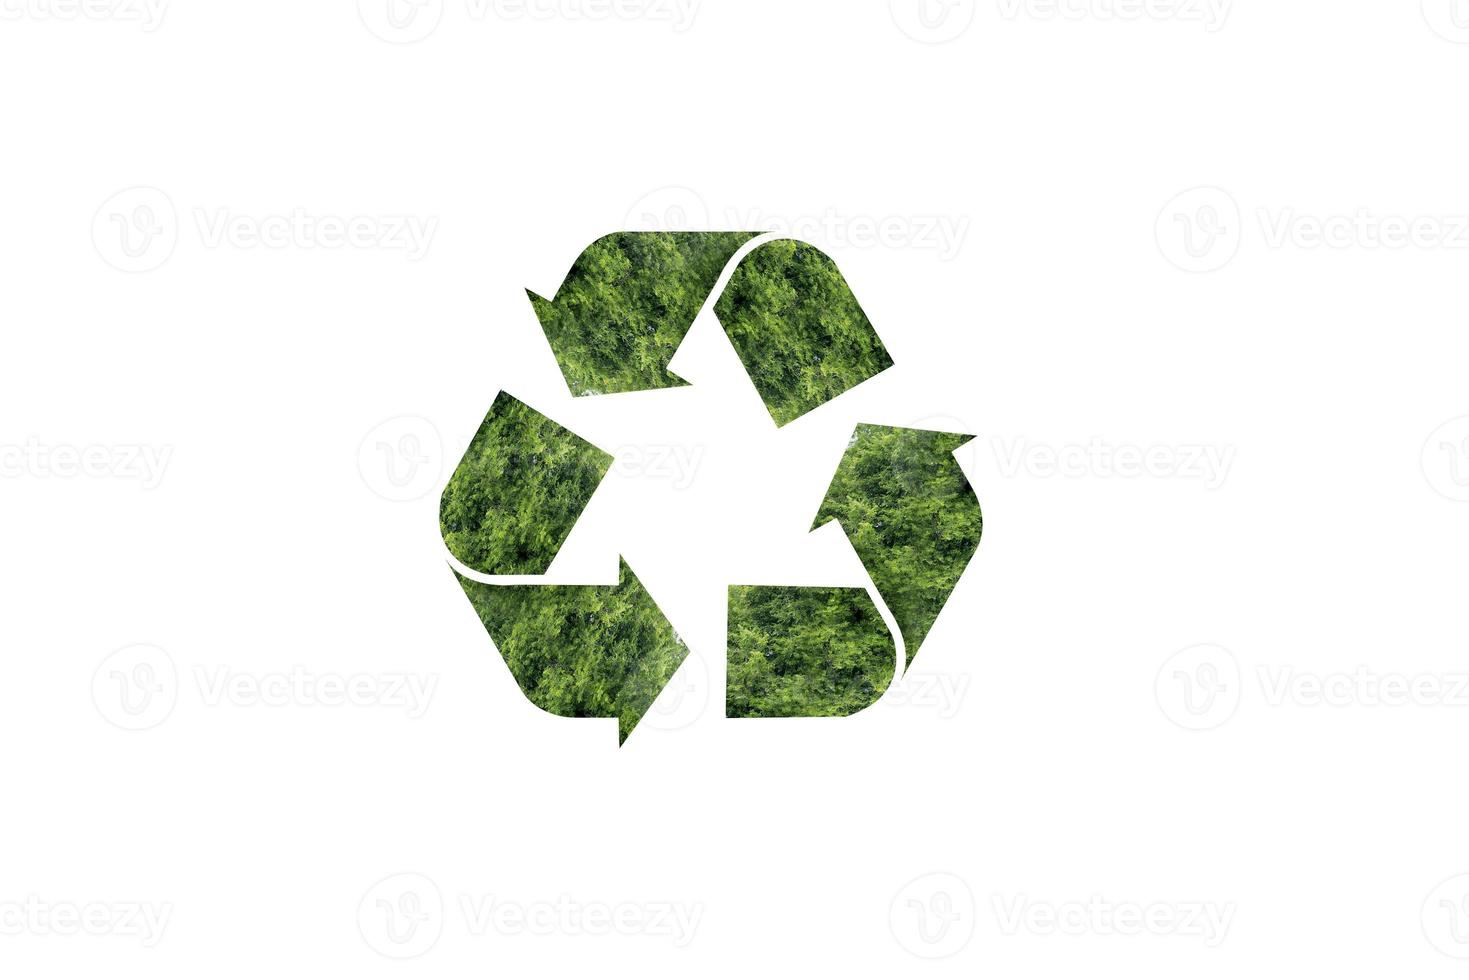 símbolos de reciclaje deja la naturaleza verde separado hermoso fondo blanco foto